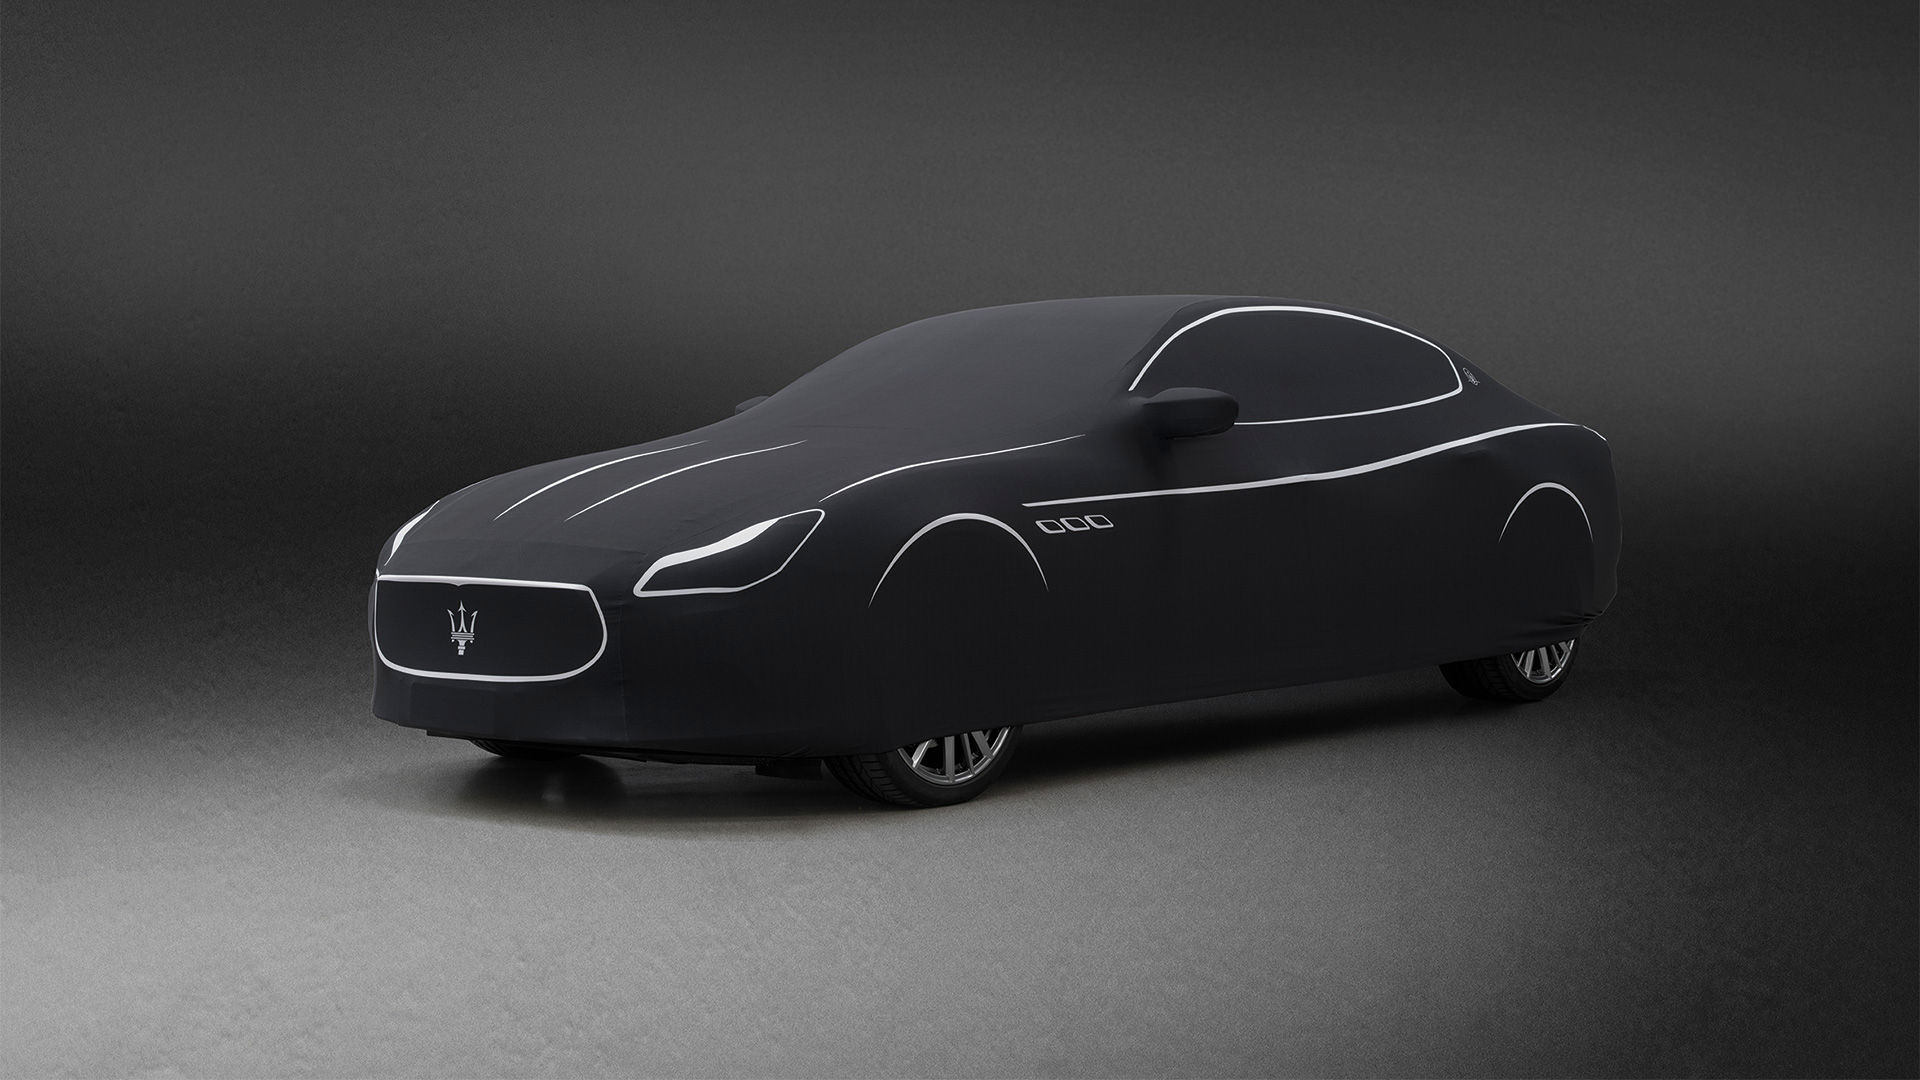 Funda protectora negra para Maserati Quattroporte